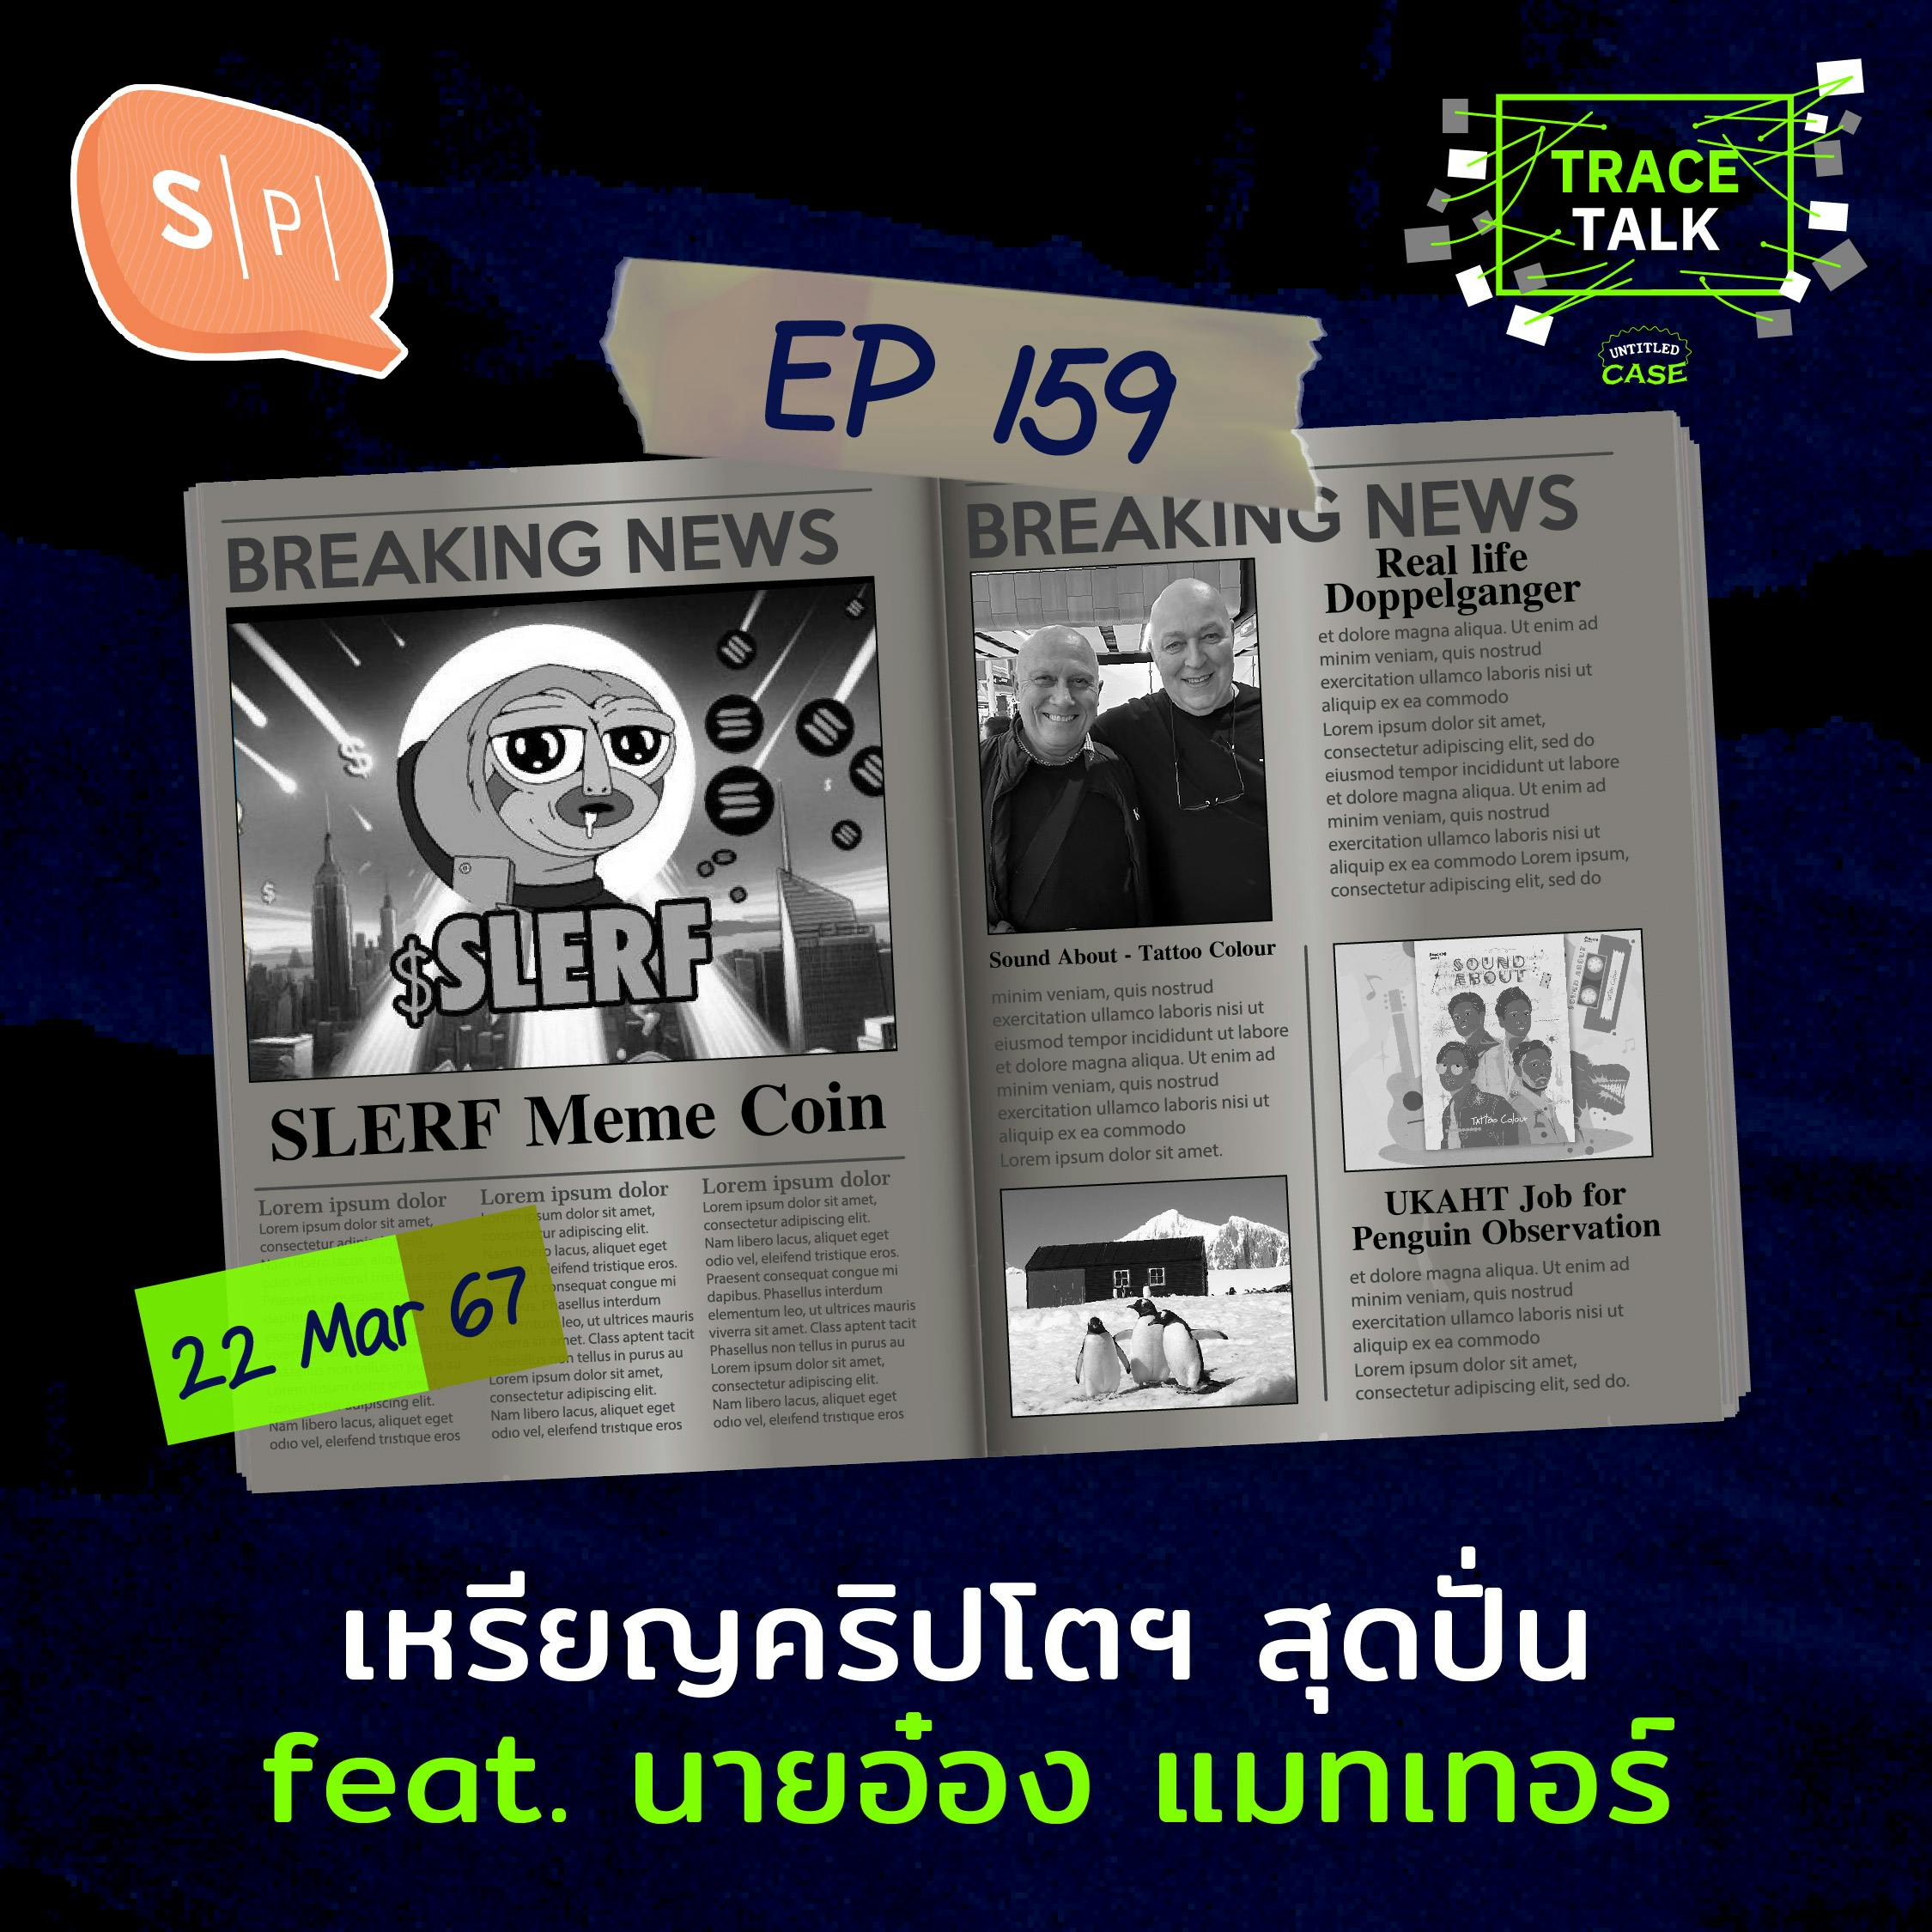 slerf เหรียญคริปโตฯ สุดปั่น feat. นายอ๋อง แมทเทอร์ | Trace Talk EP159